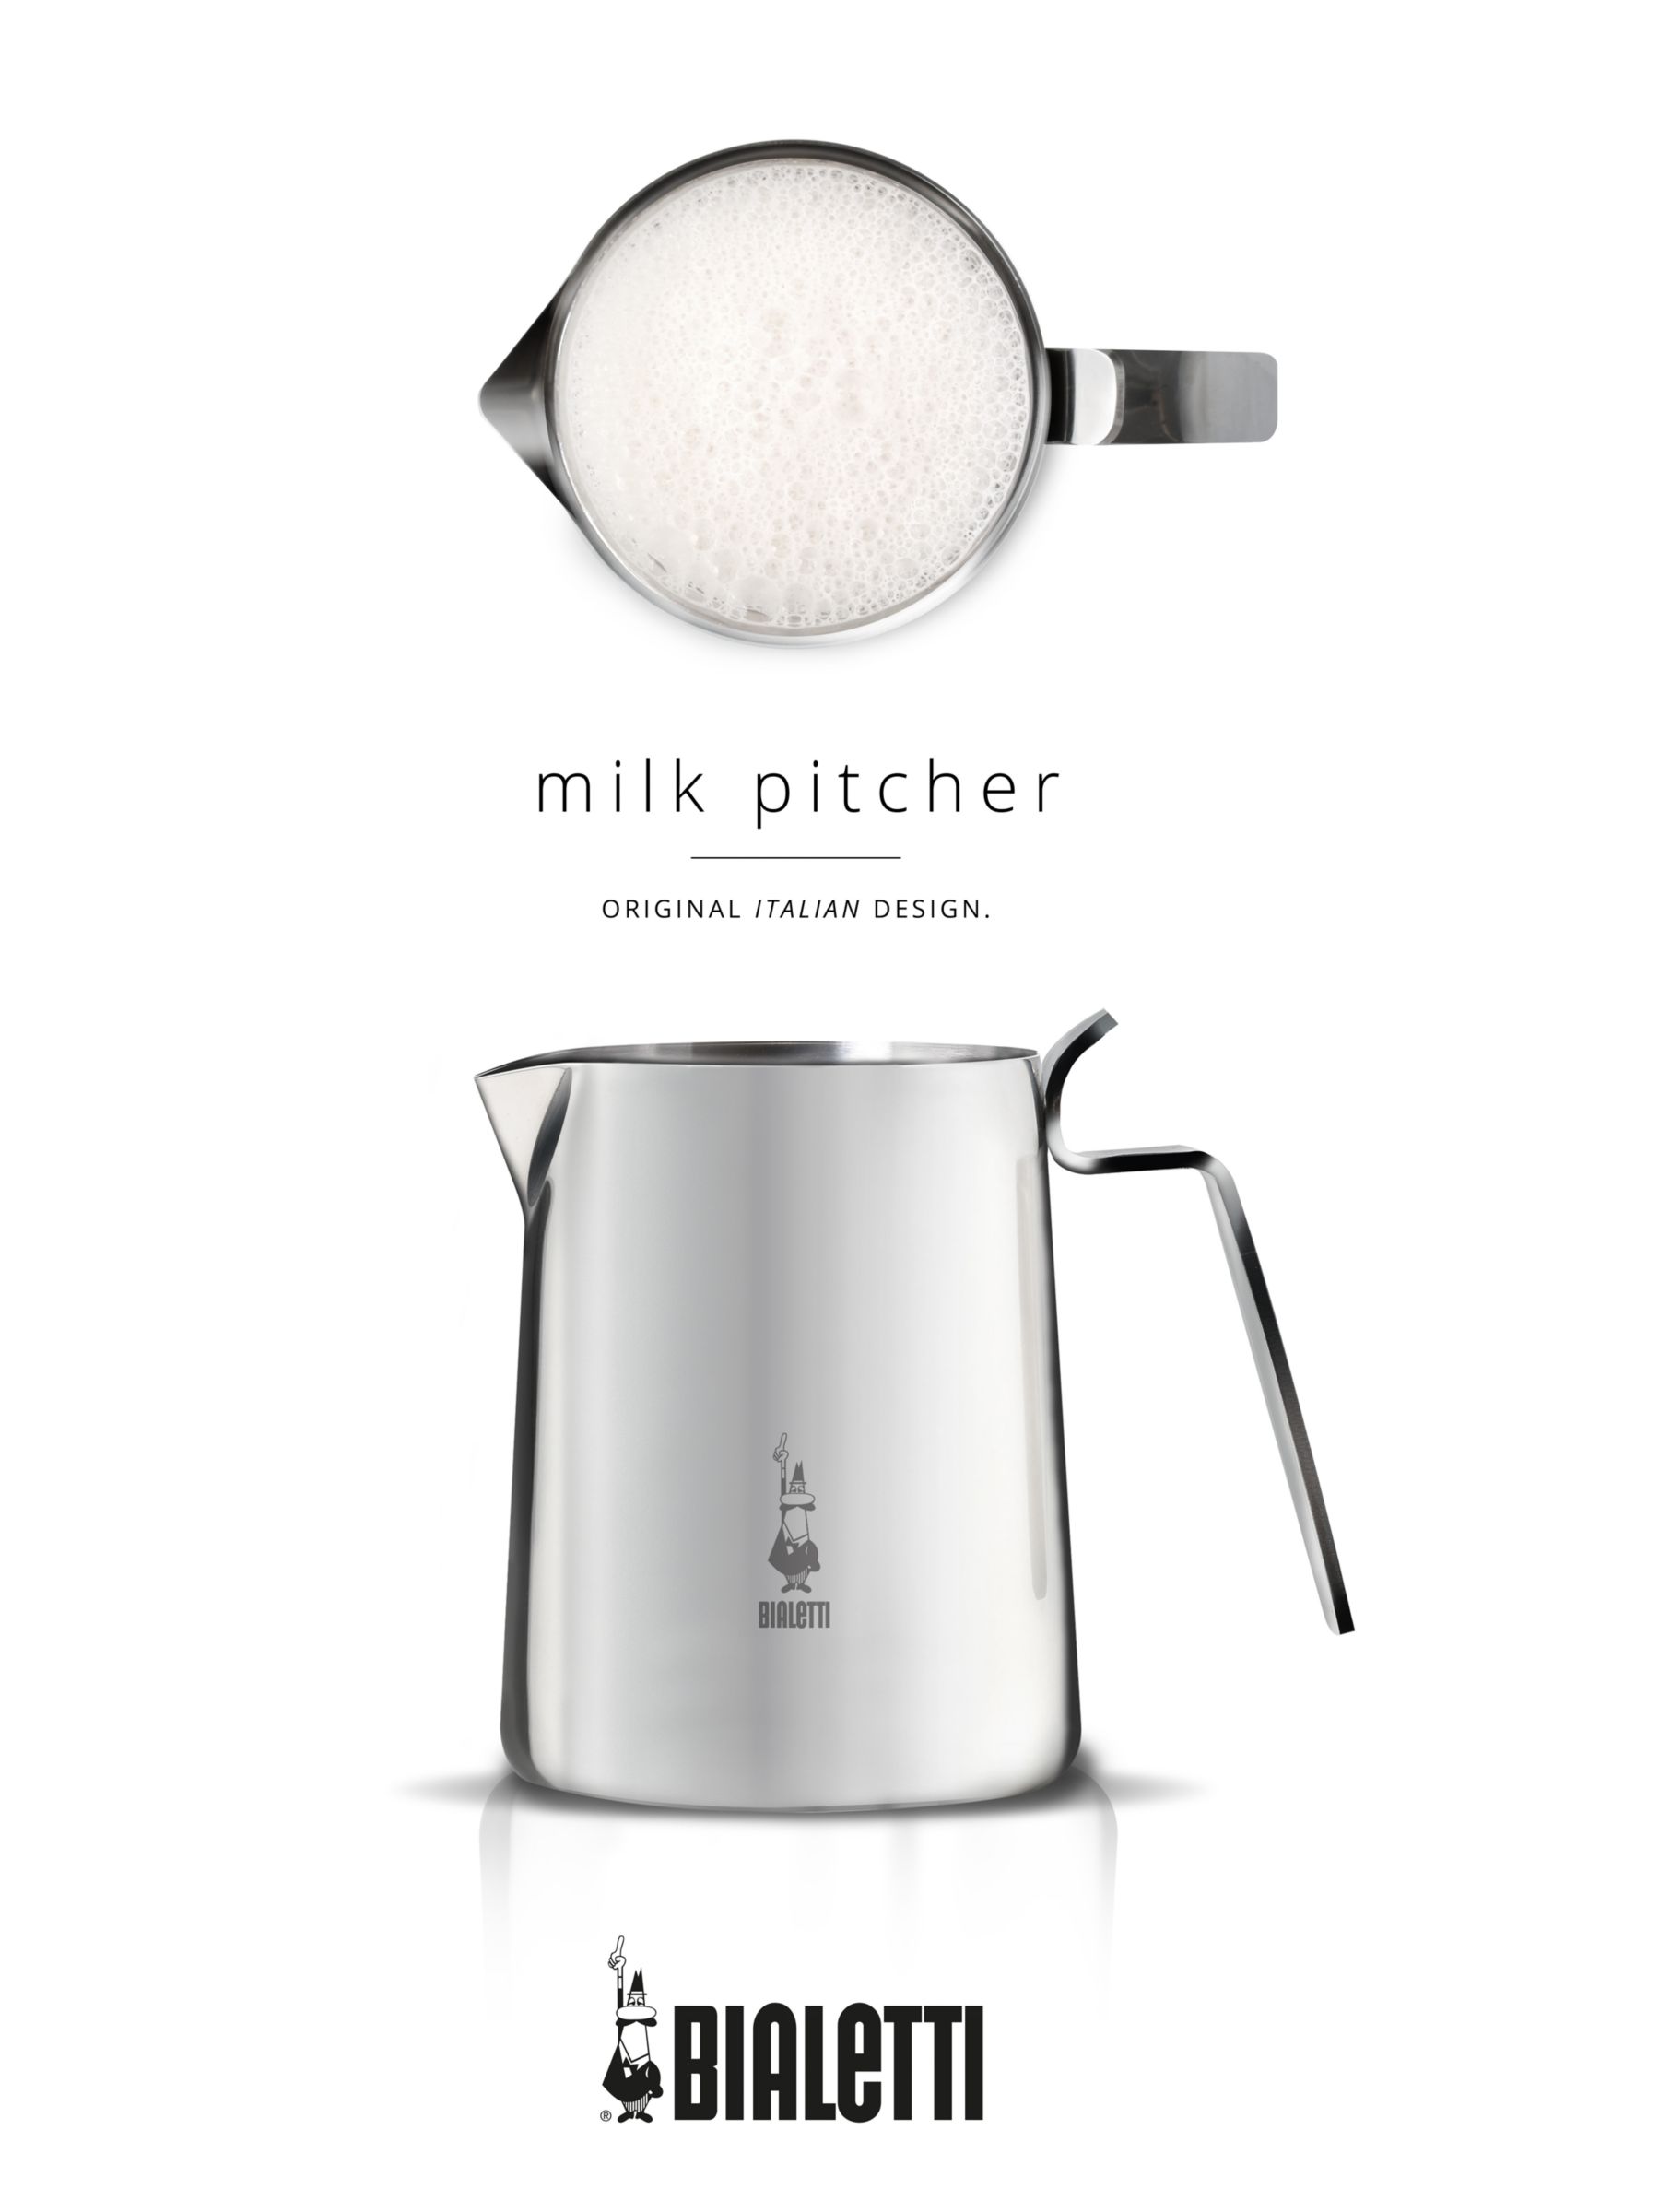 Milk pitcher - Bialetti